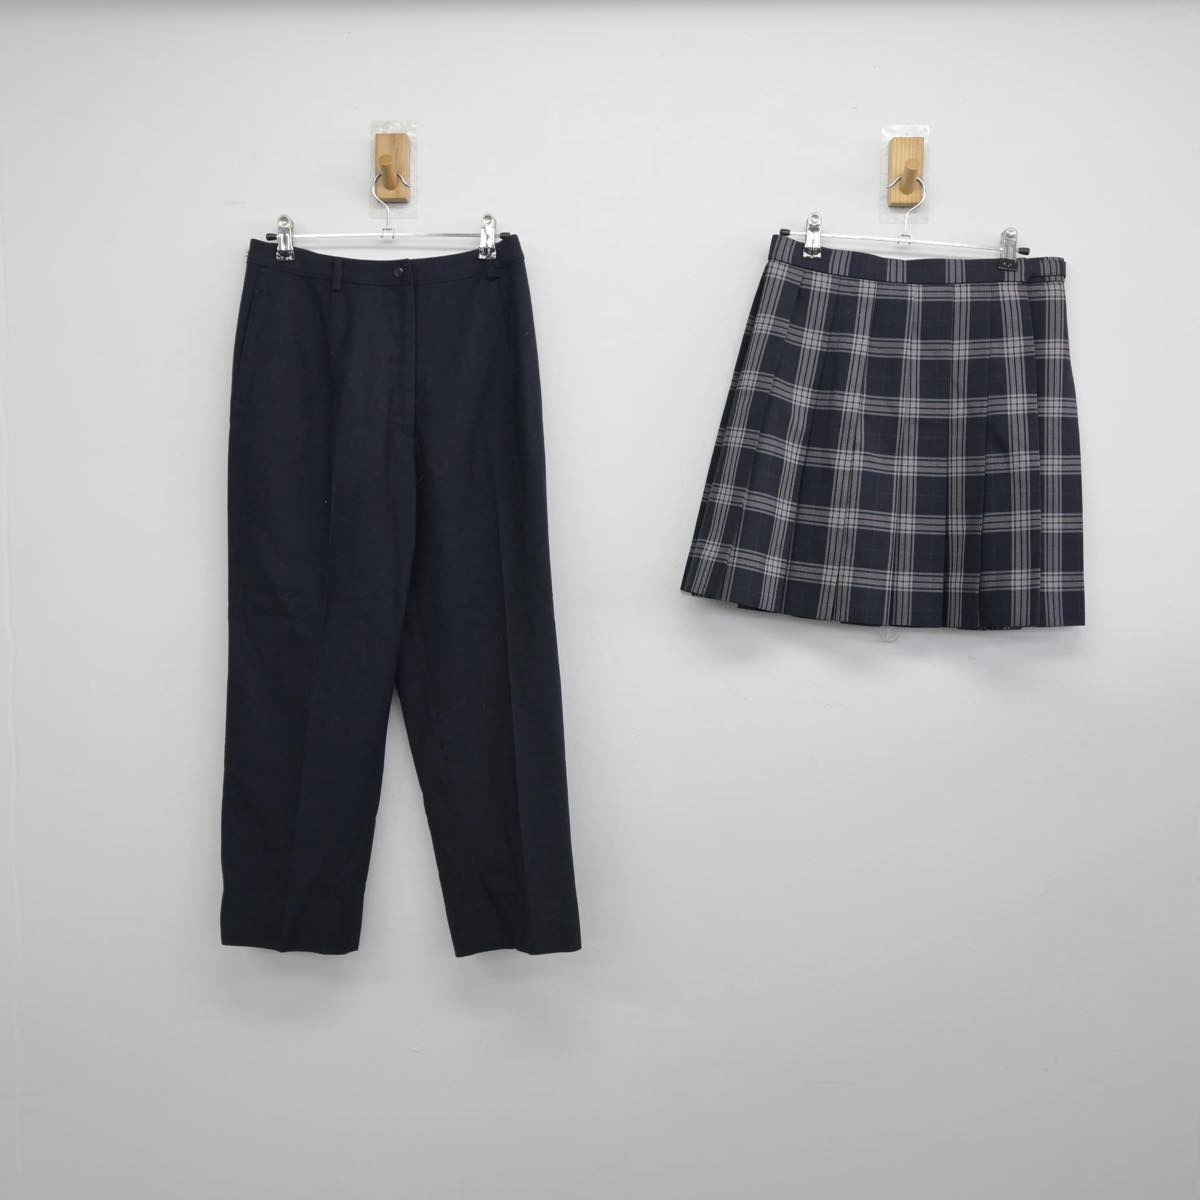 安い爆買い神奈川県　麻生総合高校　冬スカート 学生服